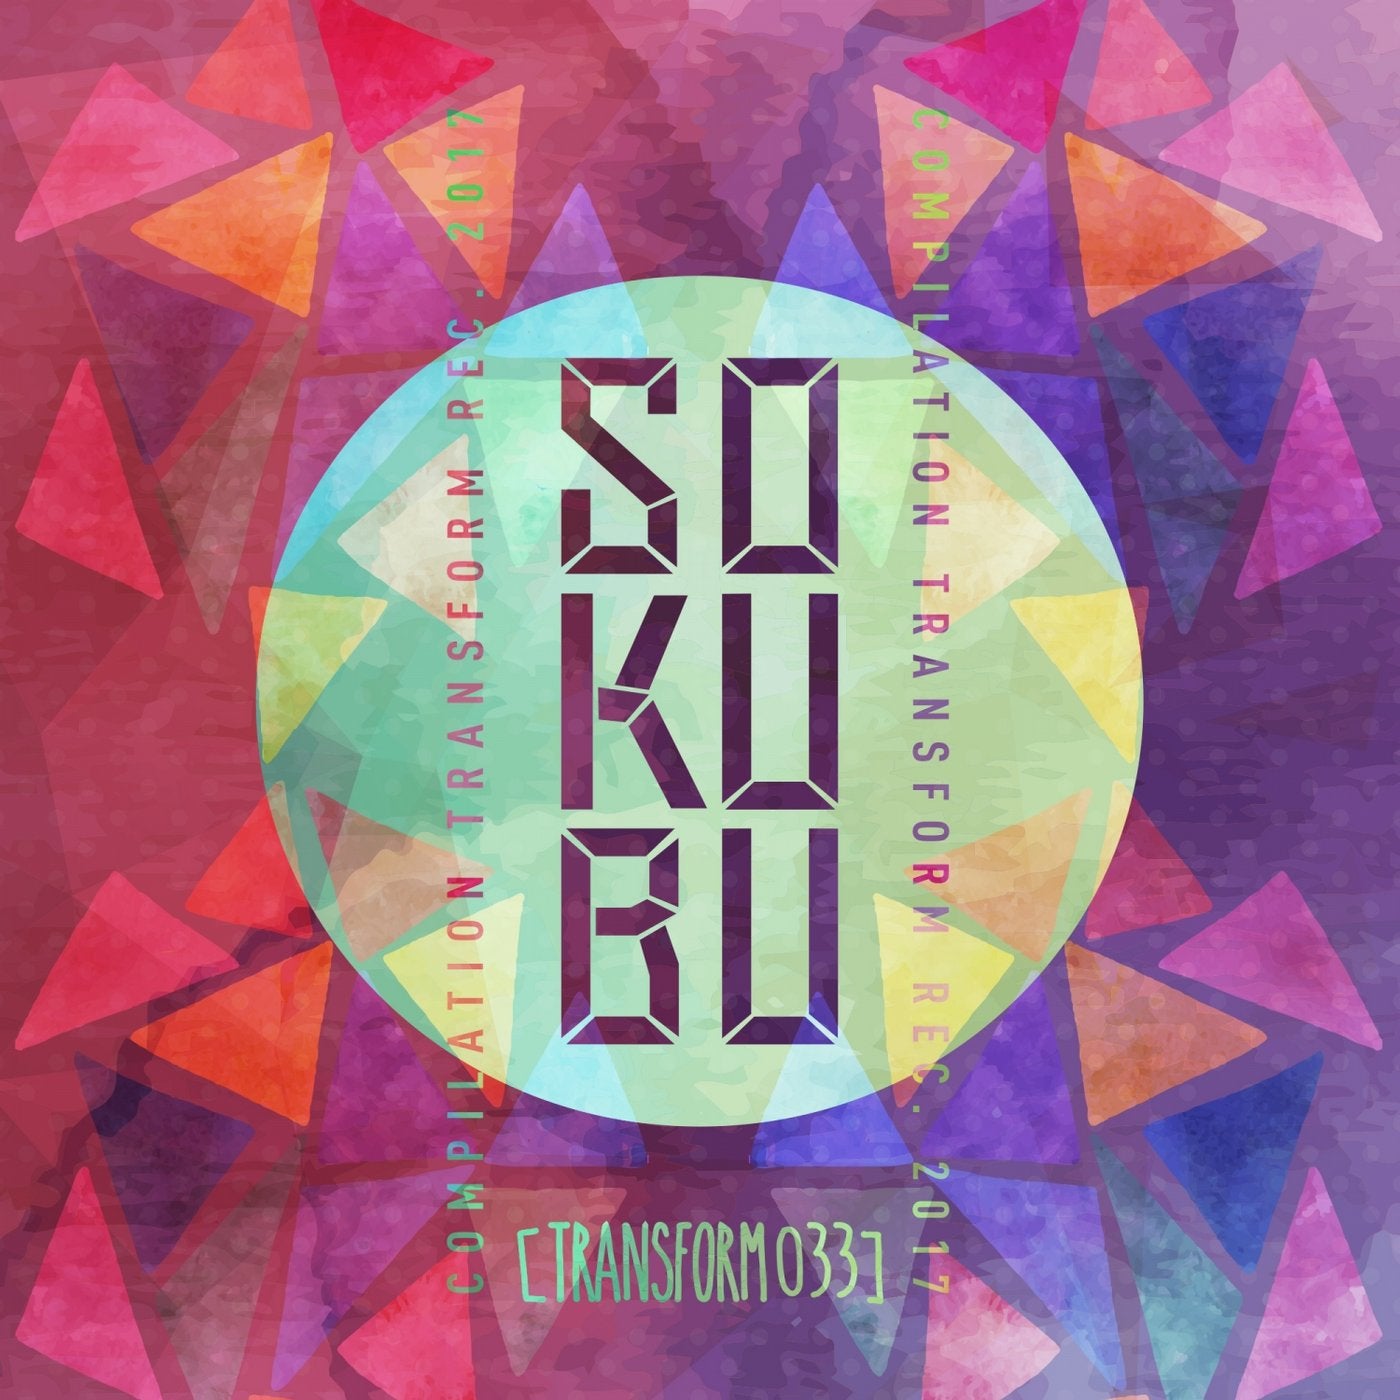 Sokubu Compilation Transform Recordings 2017